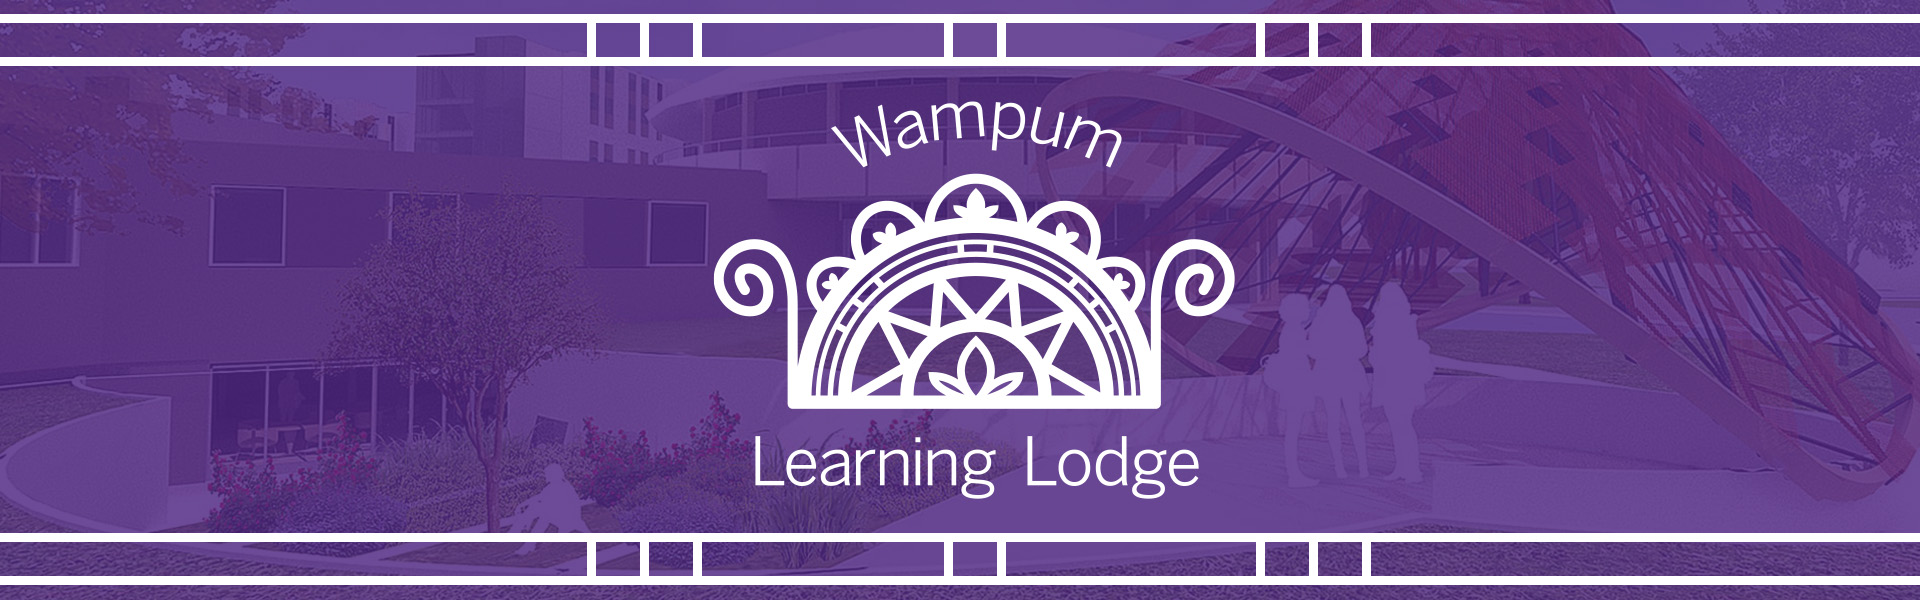 Wampum Learning Lodge